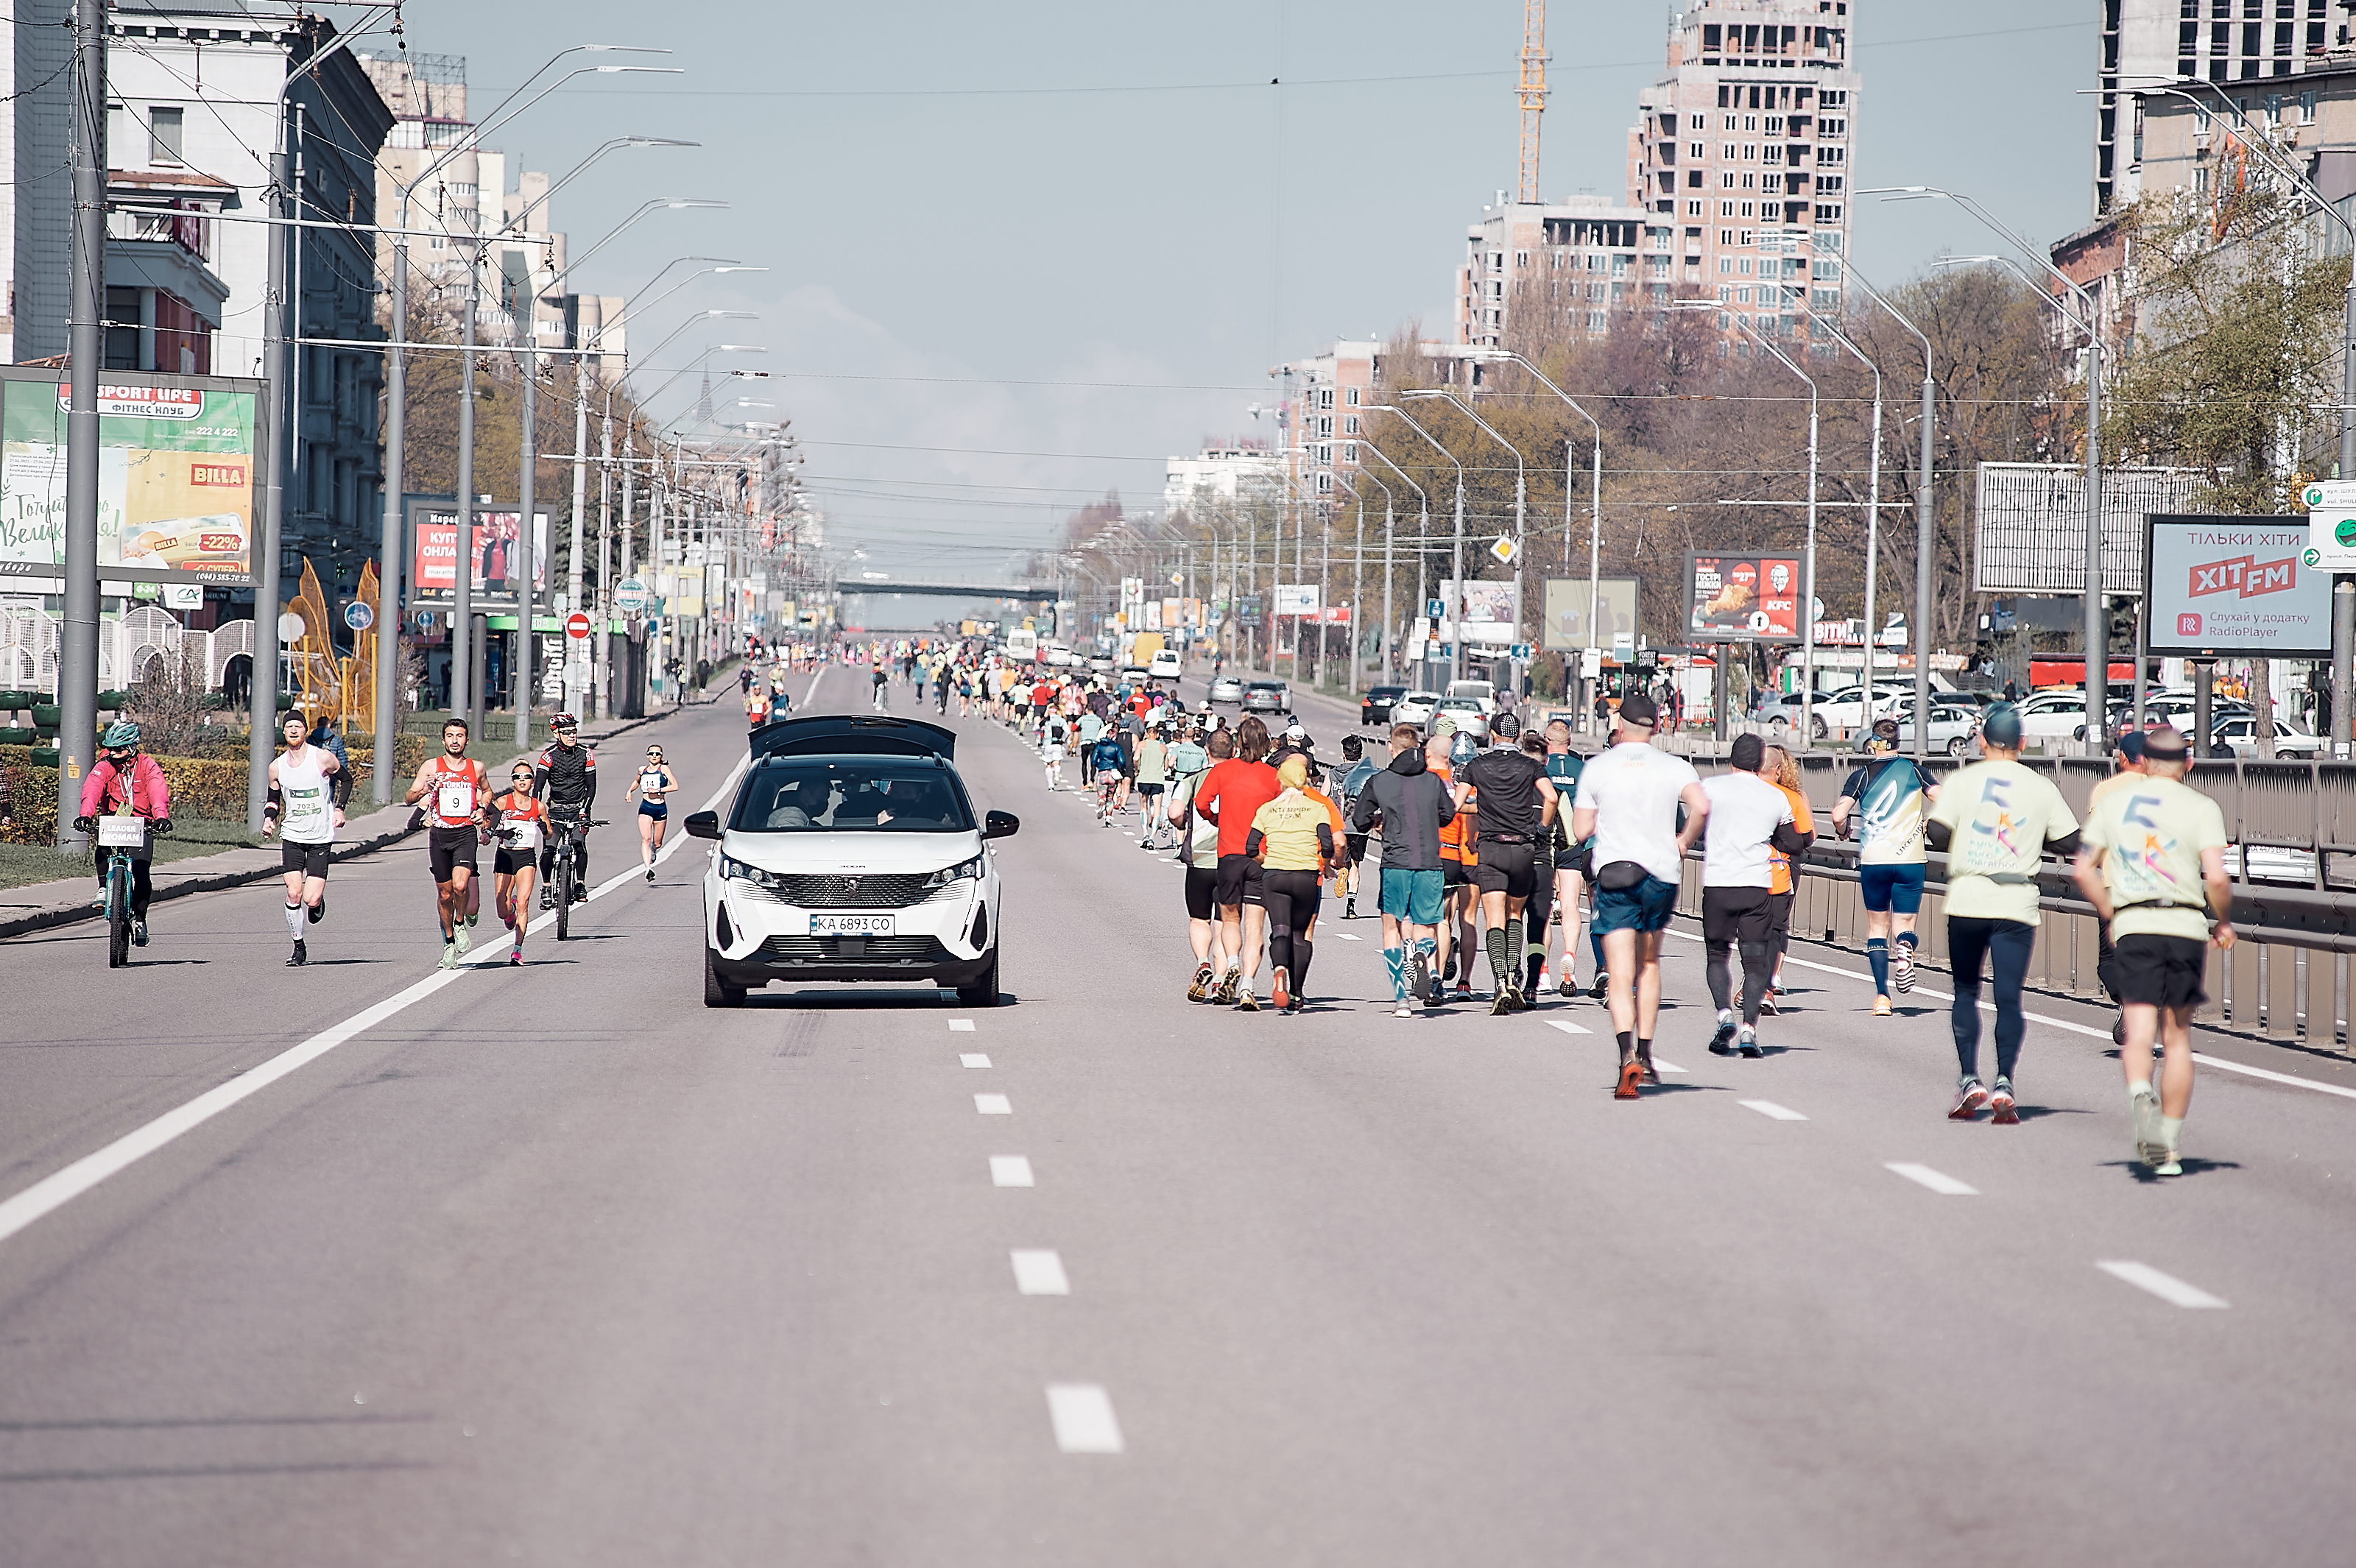 Плагін-гібрид DS7 Crossback E-Tense та Peugeot 3008 Hybrid4 проїхали на електротязі разом з марафонцями 42 км.